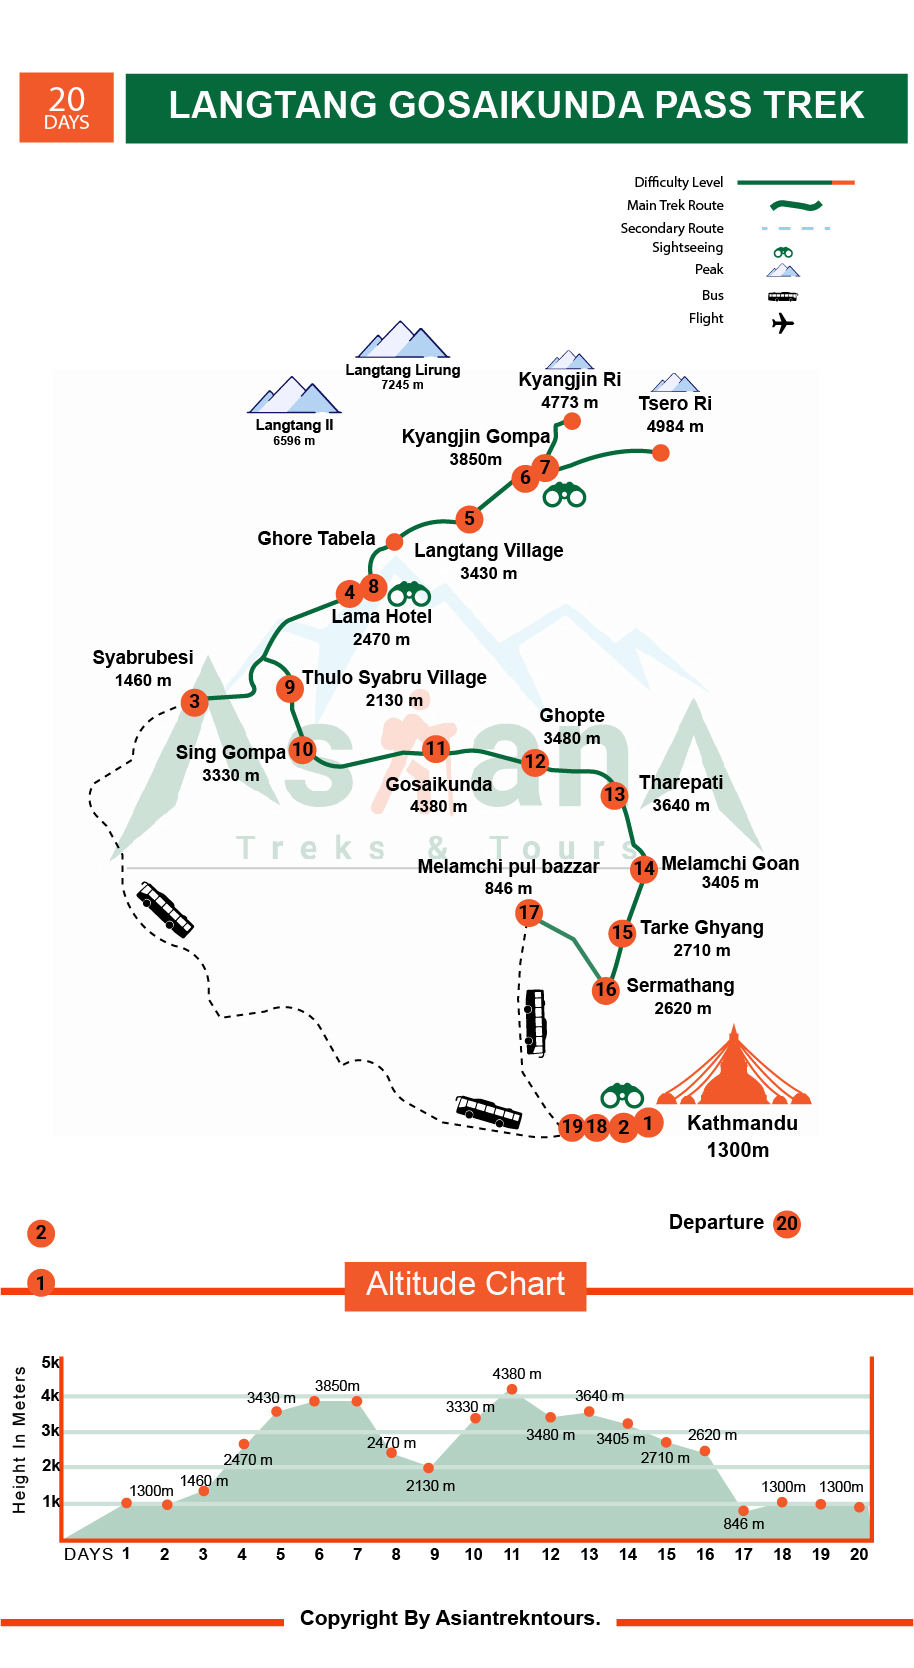 Map of Langtang Gosaikunda Passes Trekking